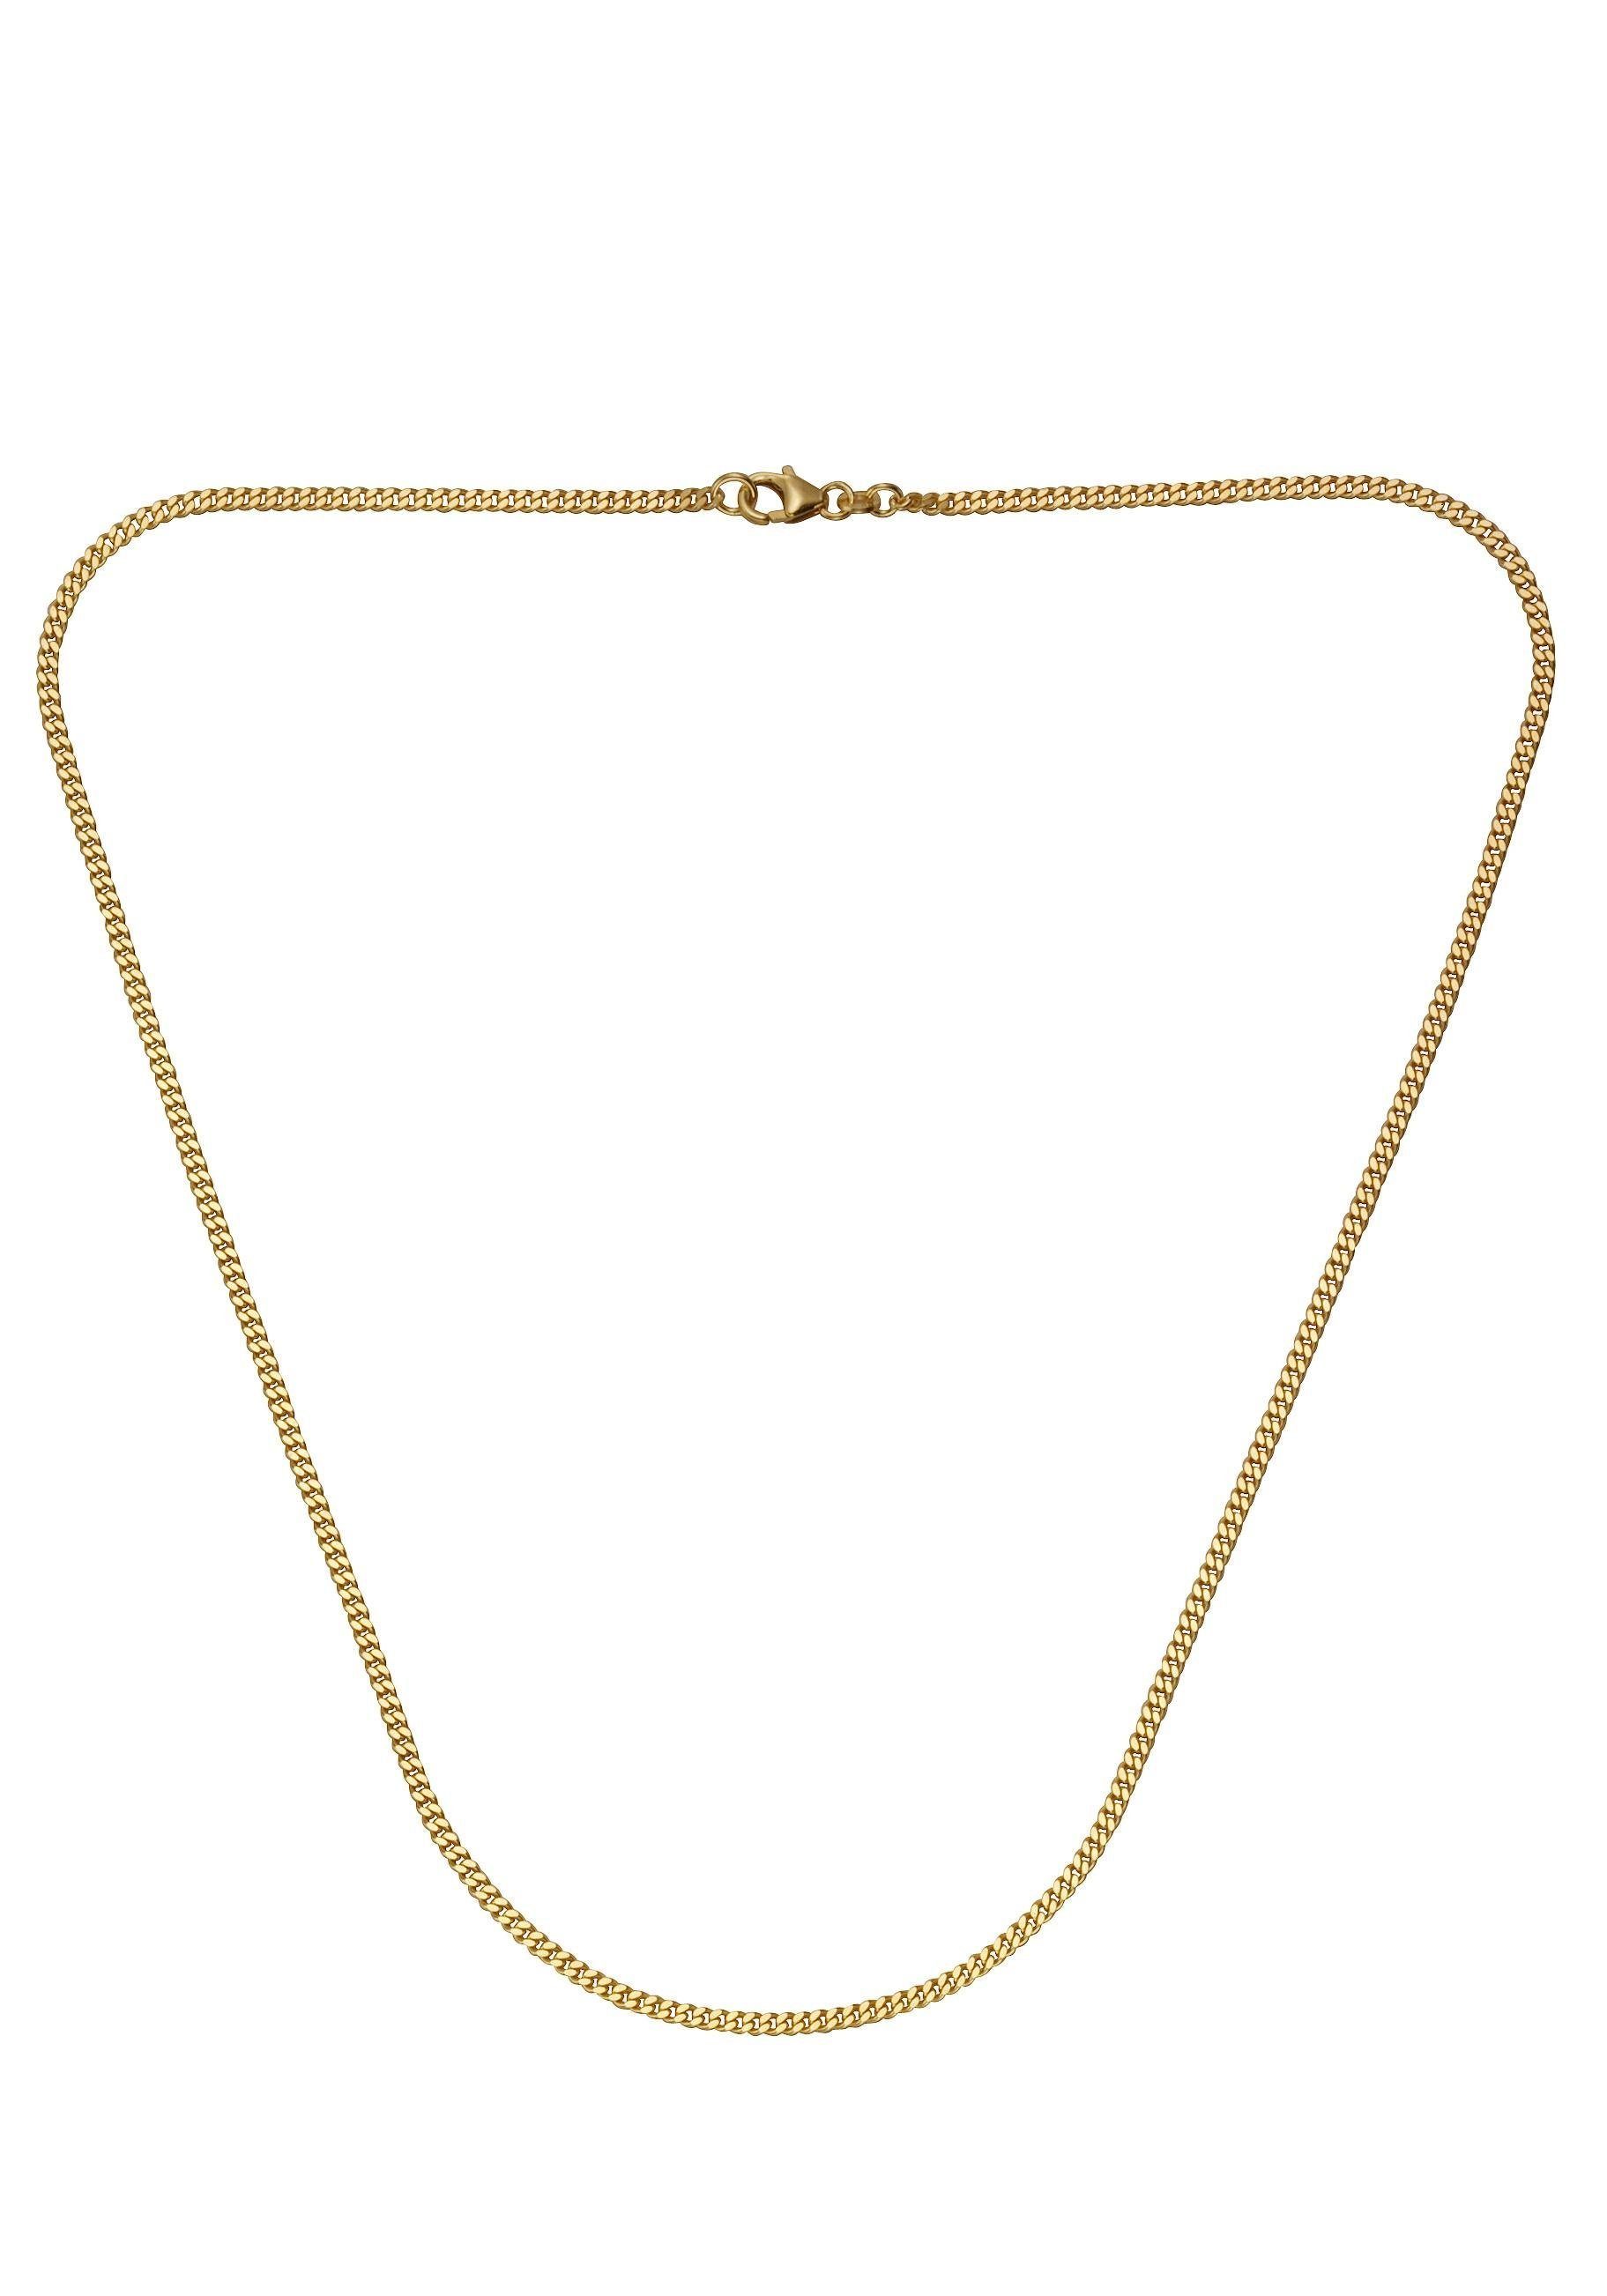 Firetti Collier Schmuck Geschenk Gold 750 Halsschmuck Halskette Goldkette Panzerkette, zu Kleid, Shirt, Jeans, Sneaker! Anlass Geburtstag Weihnachten